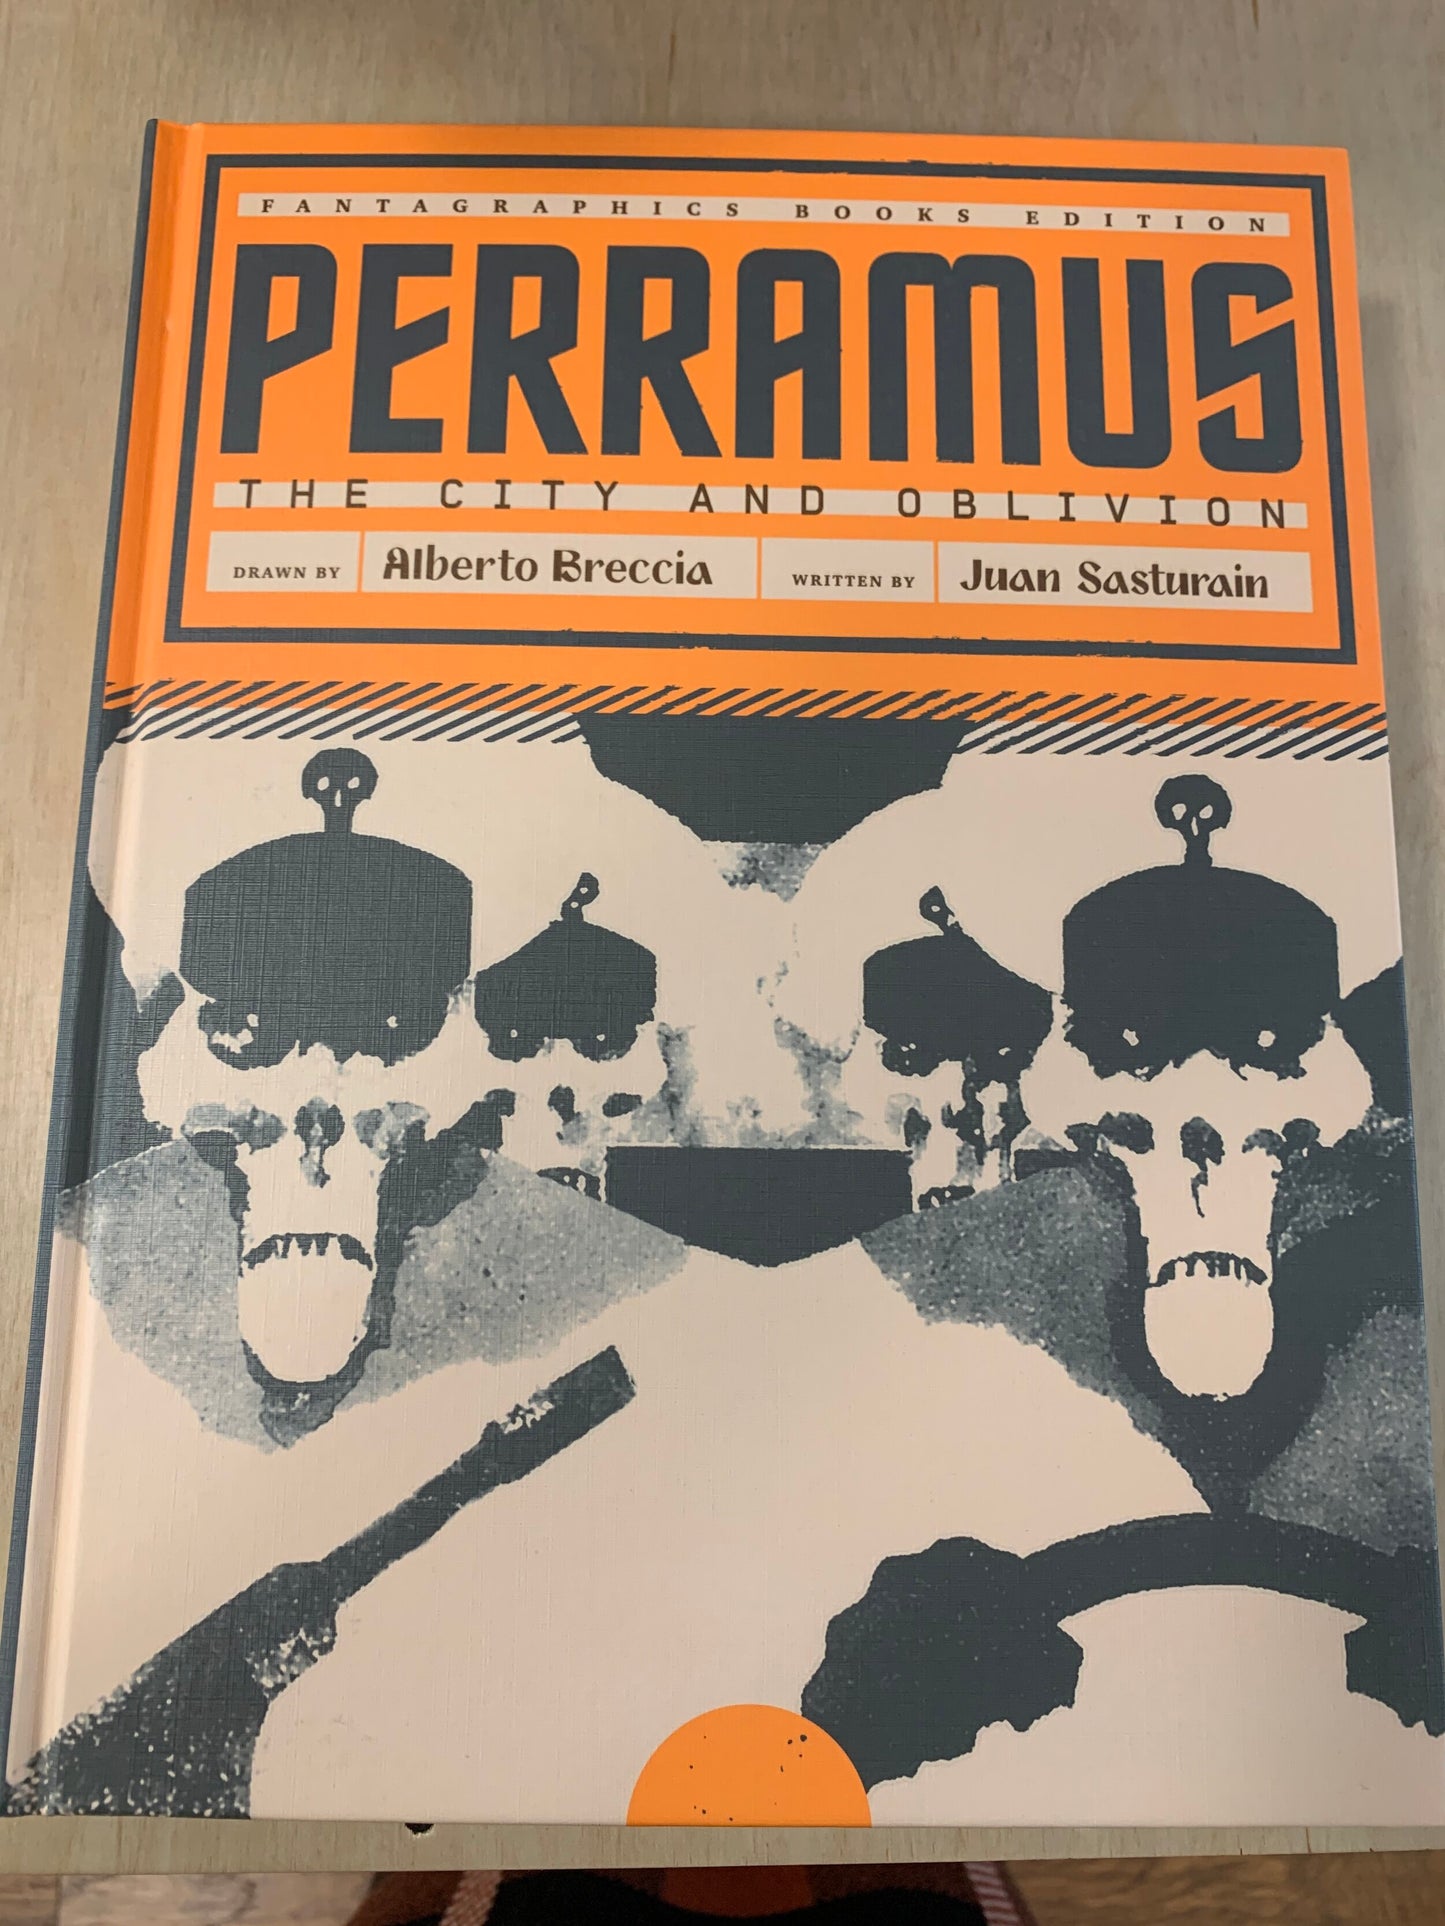 Perramus: The City of Oblivion